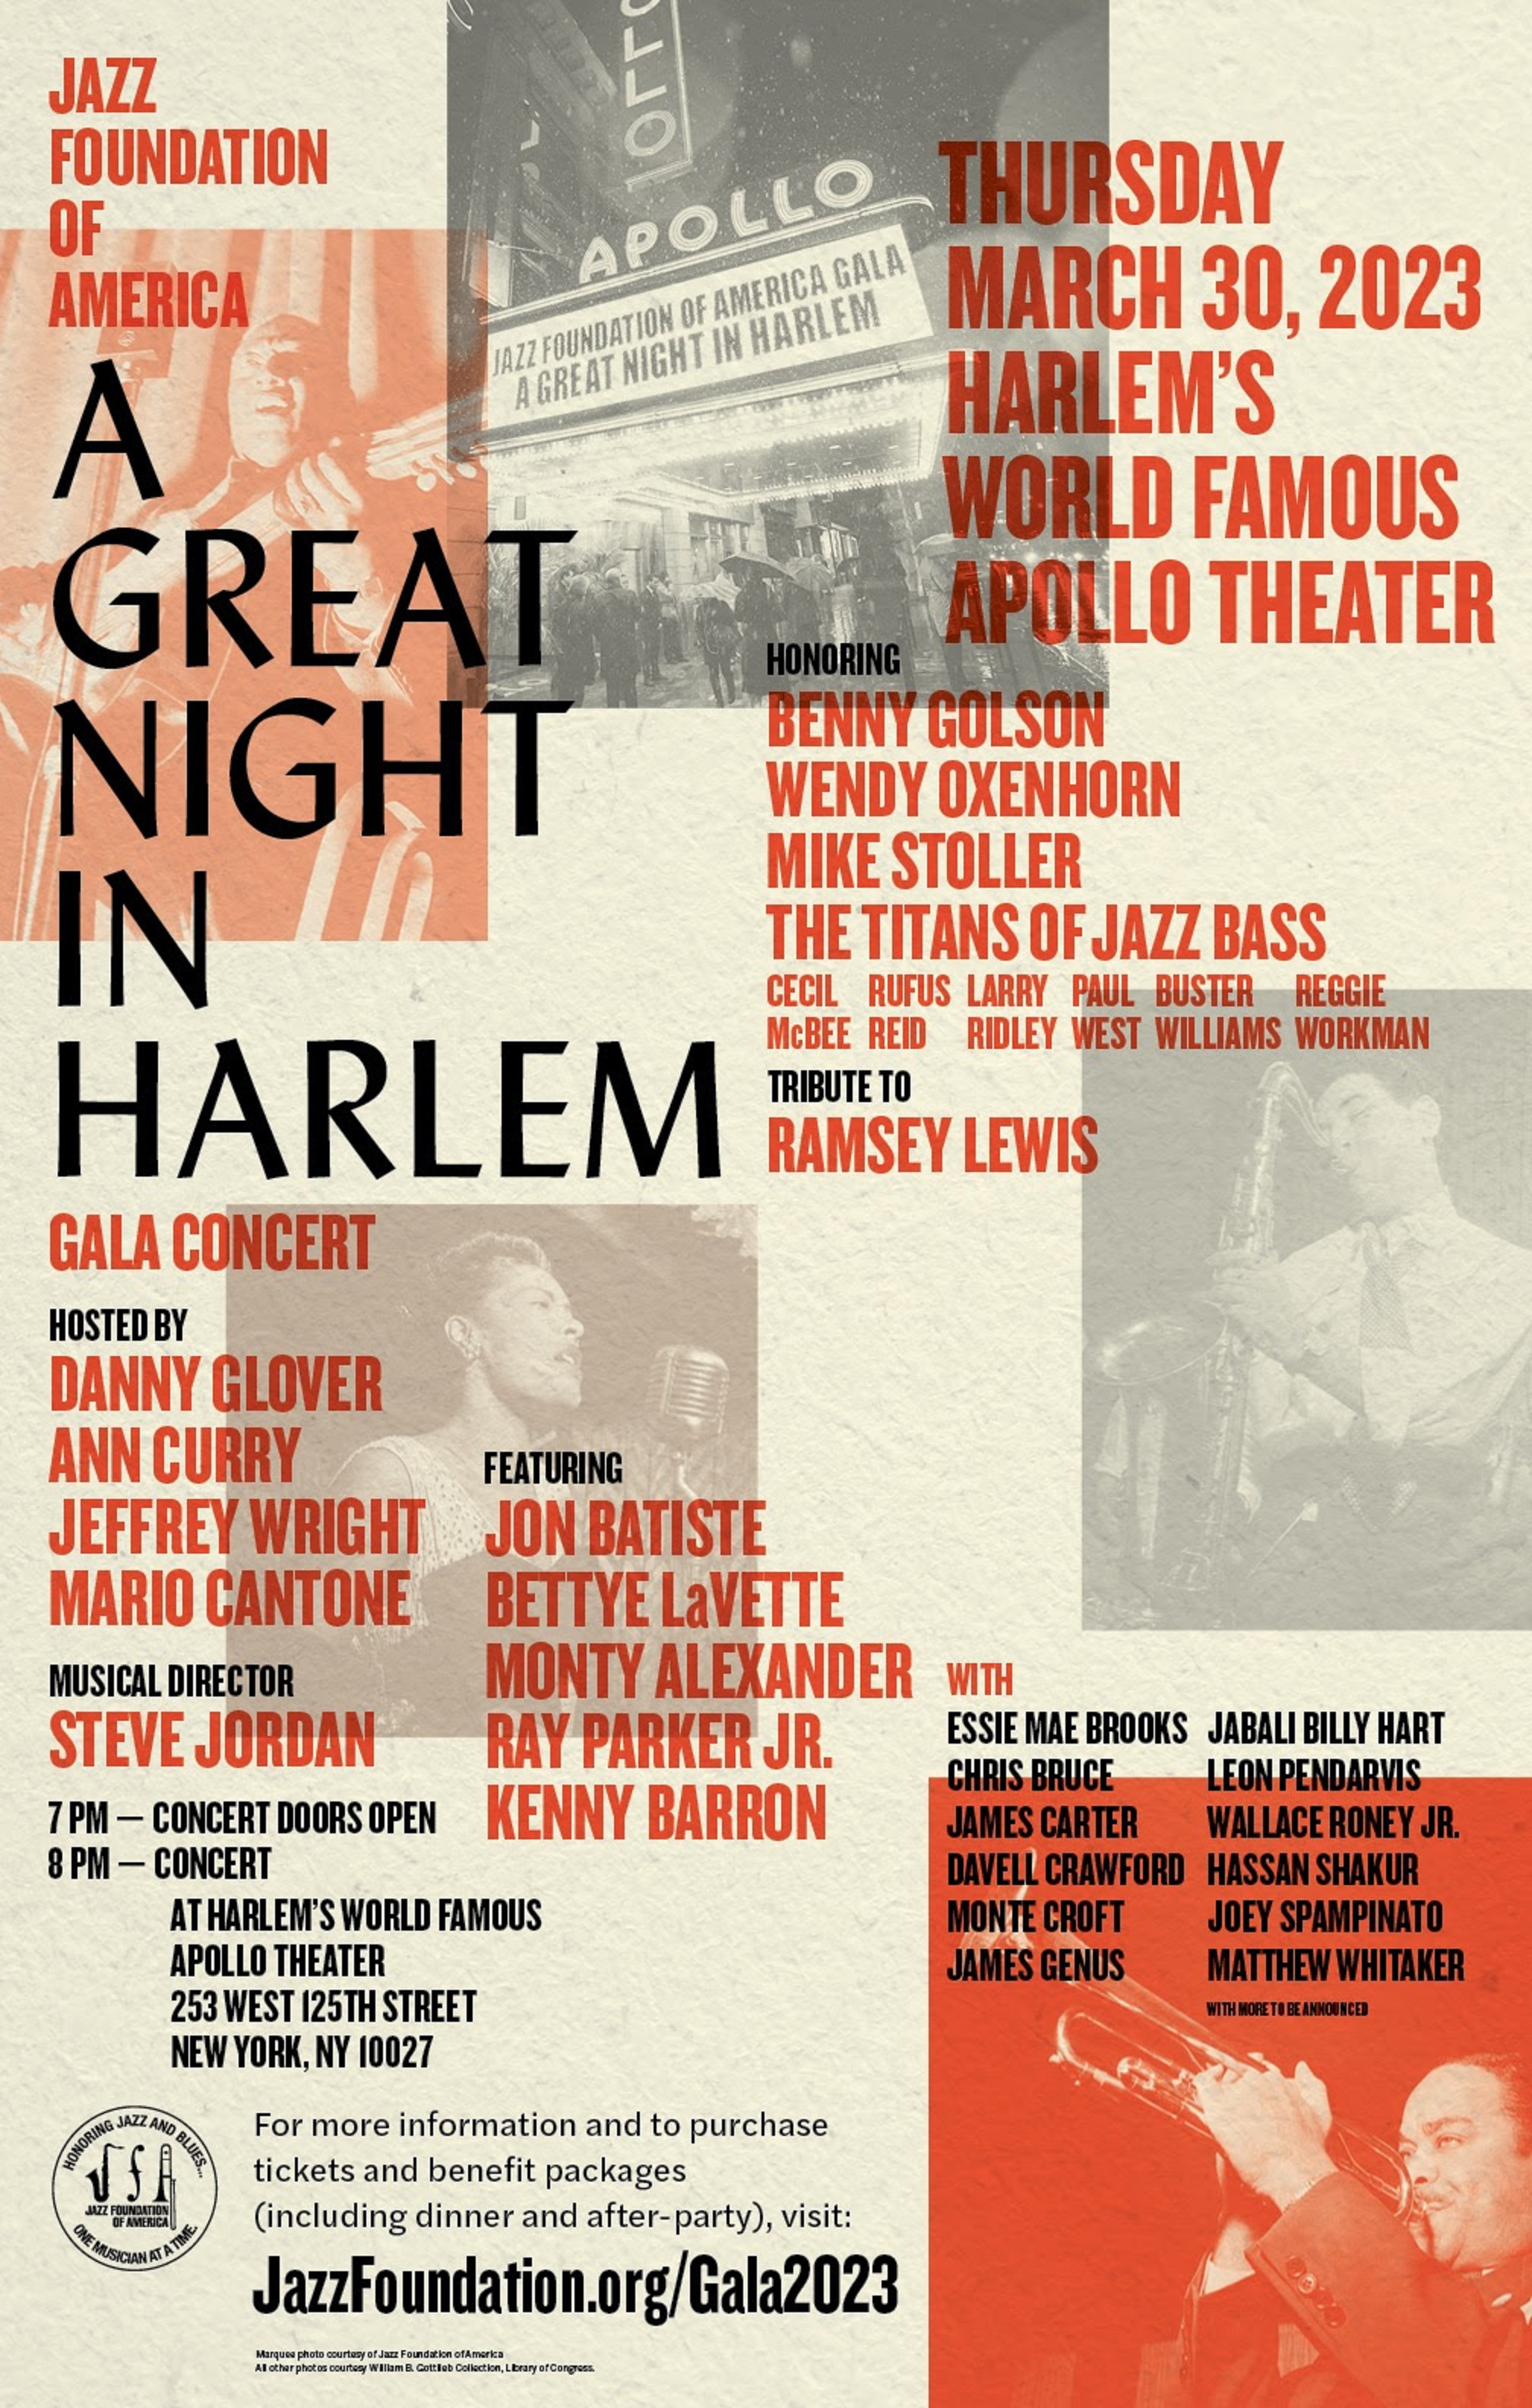 “A Great Night In Harlem" Gala (3/30) w/ Jon Batiste, Bettye LaVette, Monty Alexander, Ray Parker Jr., Kenny Barron, and many more.